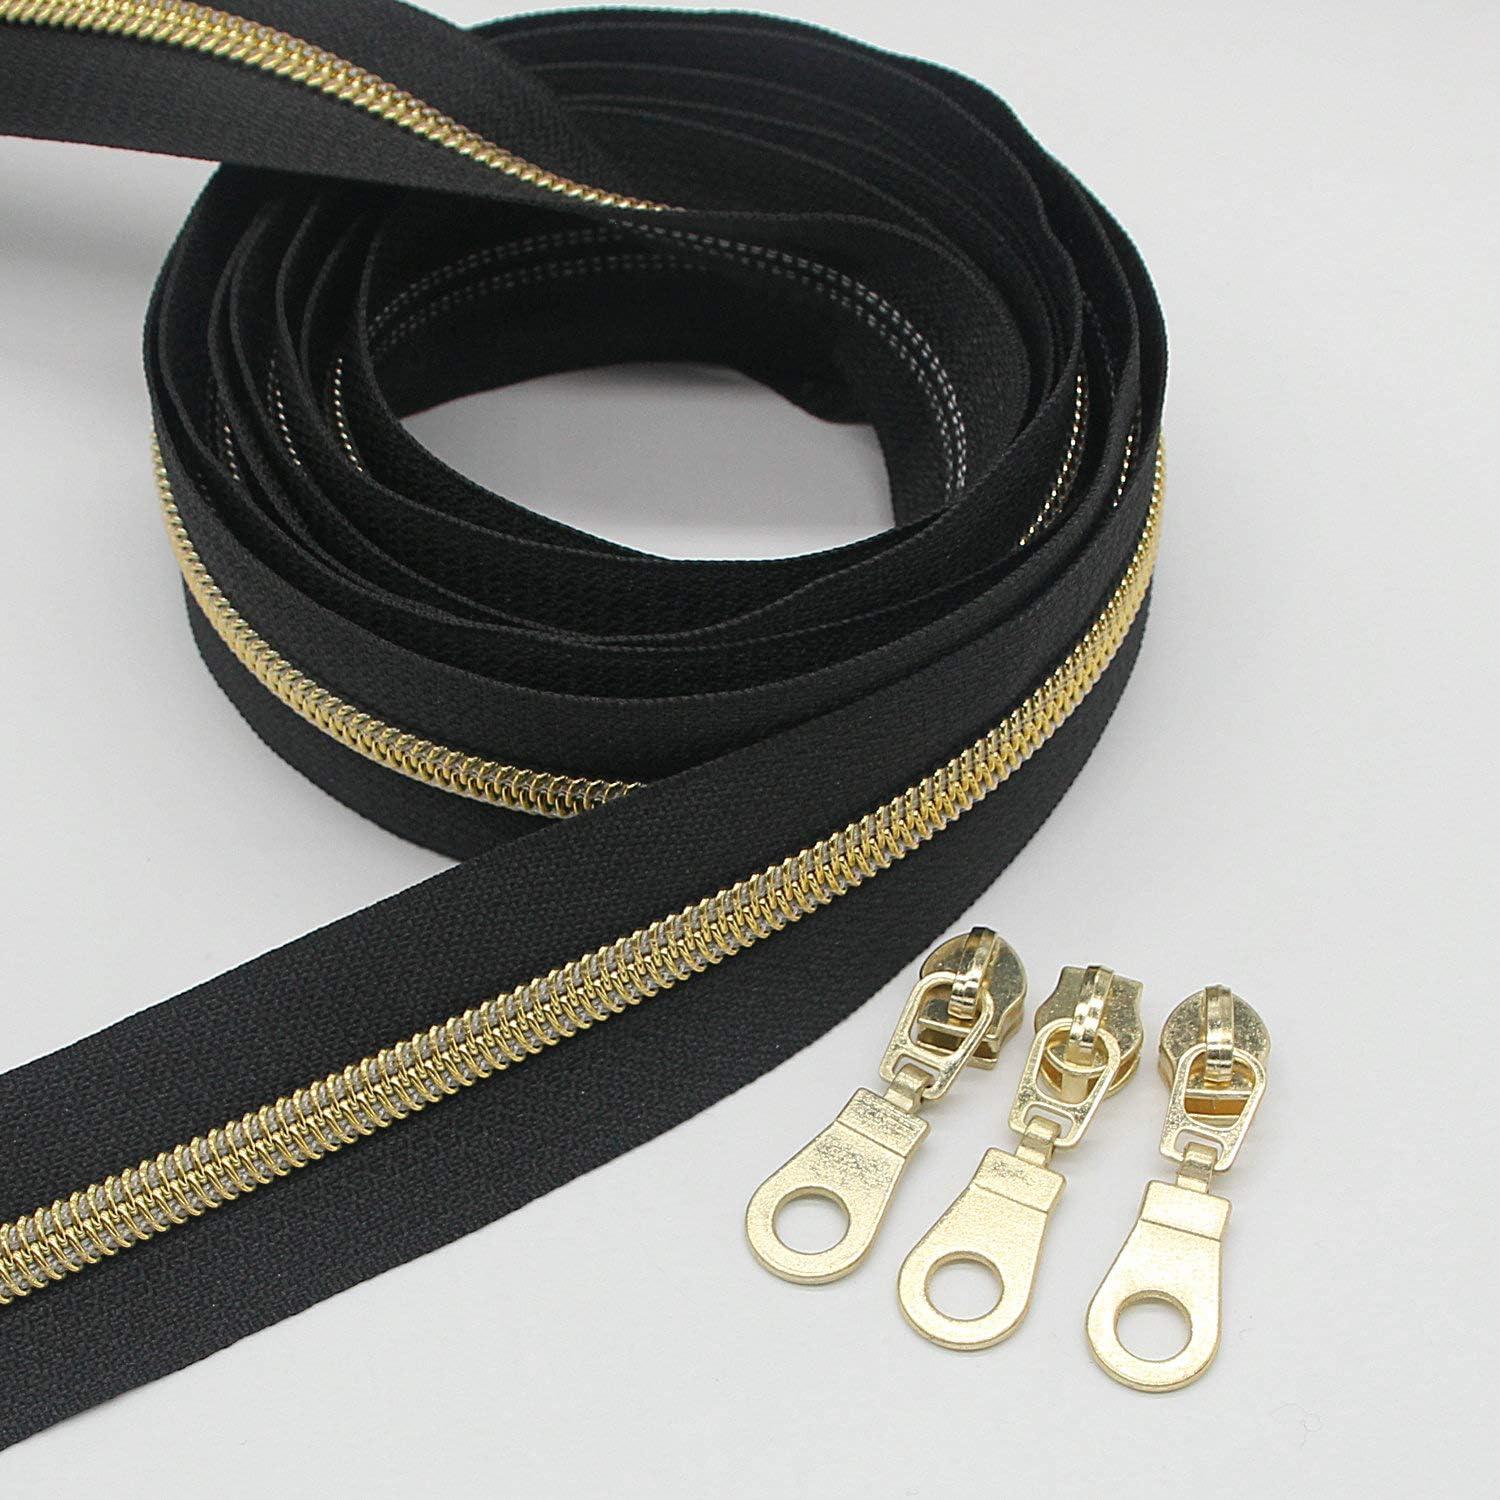 10 Yards #5 Nylon Coil Zipper Tape with 10 Metal Slider Pulls - Black